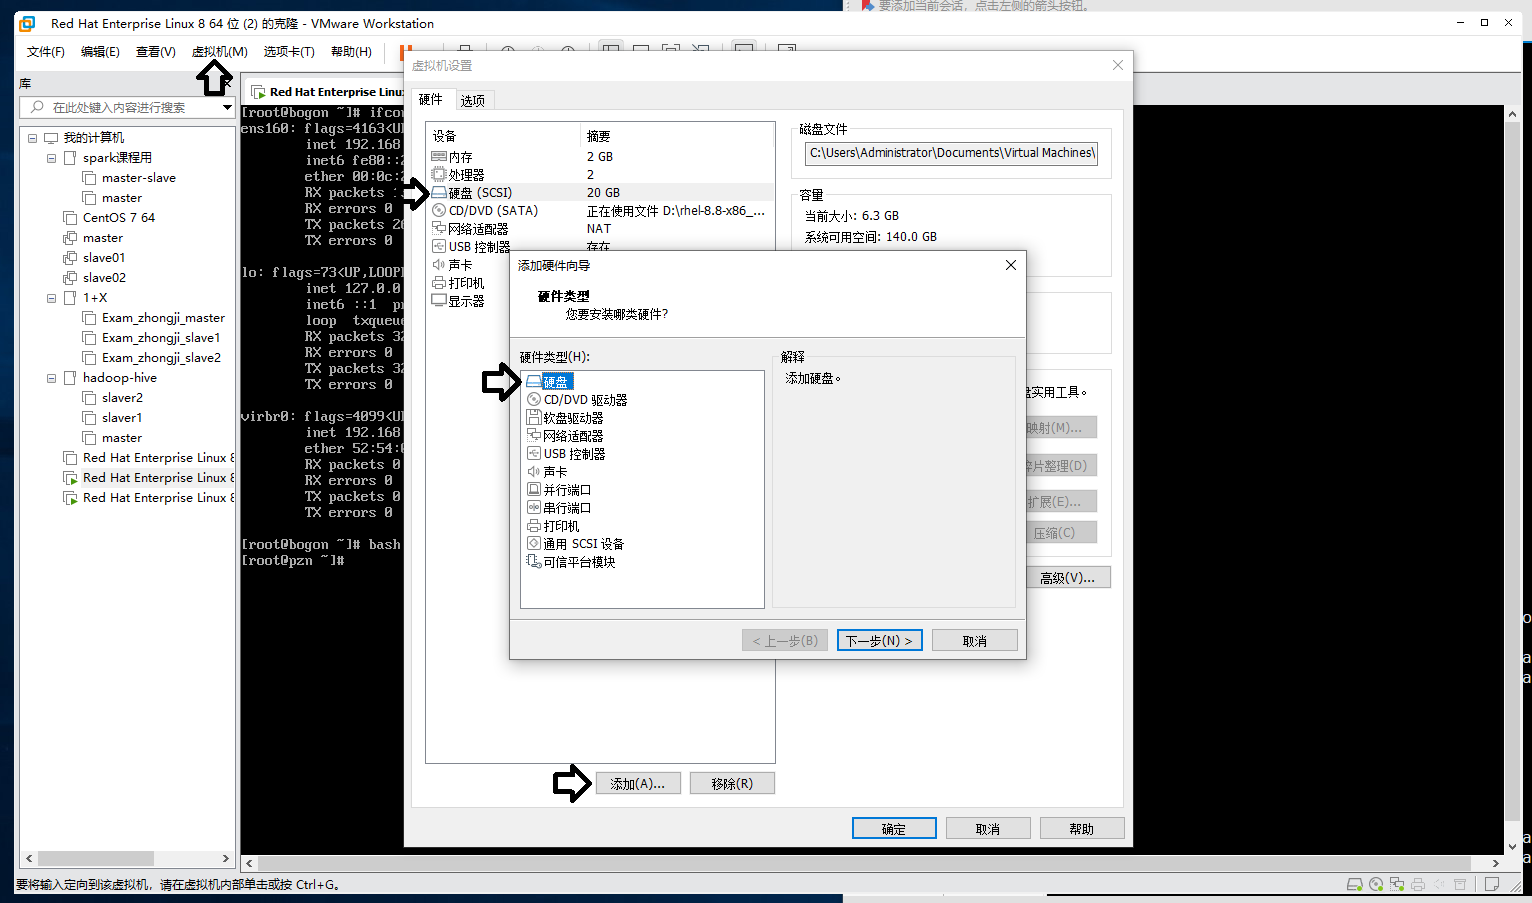 在CentOS7上模拟使用dbt2 tpc-c测试(未成功)为vm虚拟机加装硬盘解决secure-file-priv o问题解决(OS errno 13 - Permission denied)